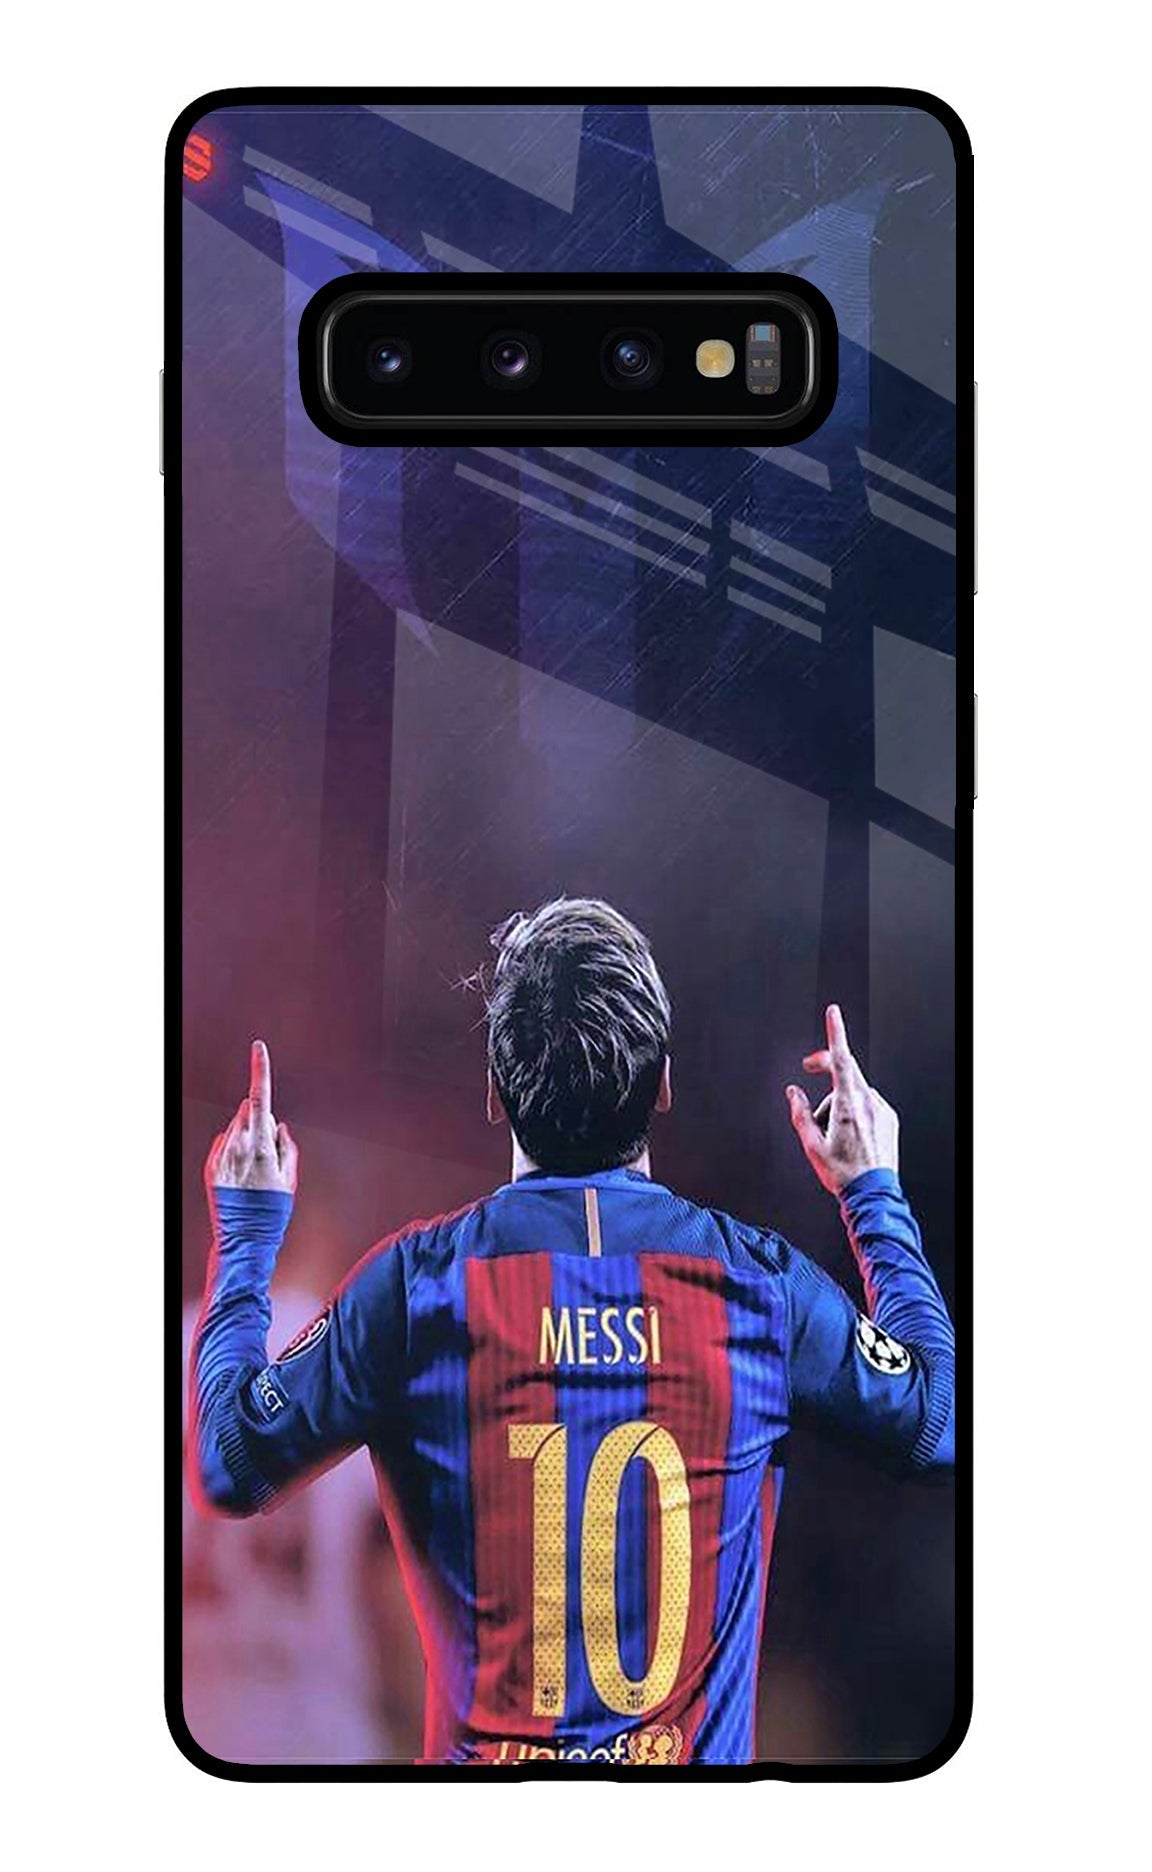 Messi Samsung S10 Plus Glass Case